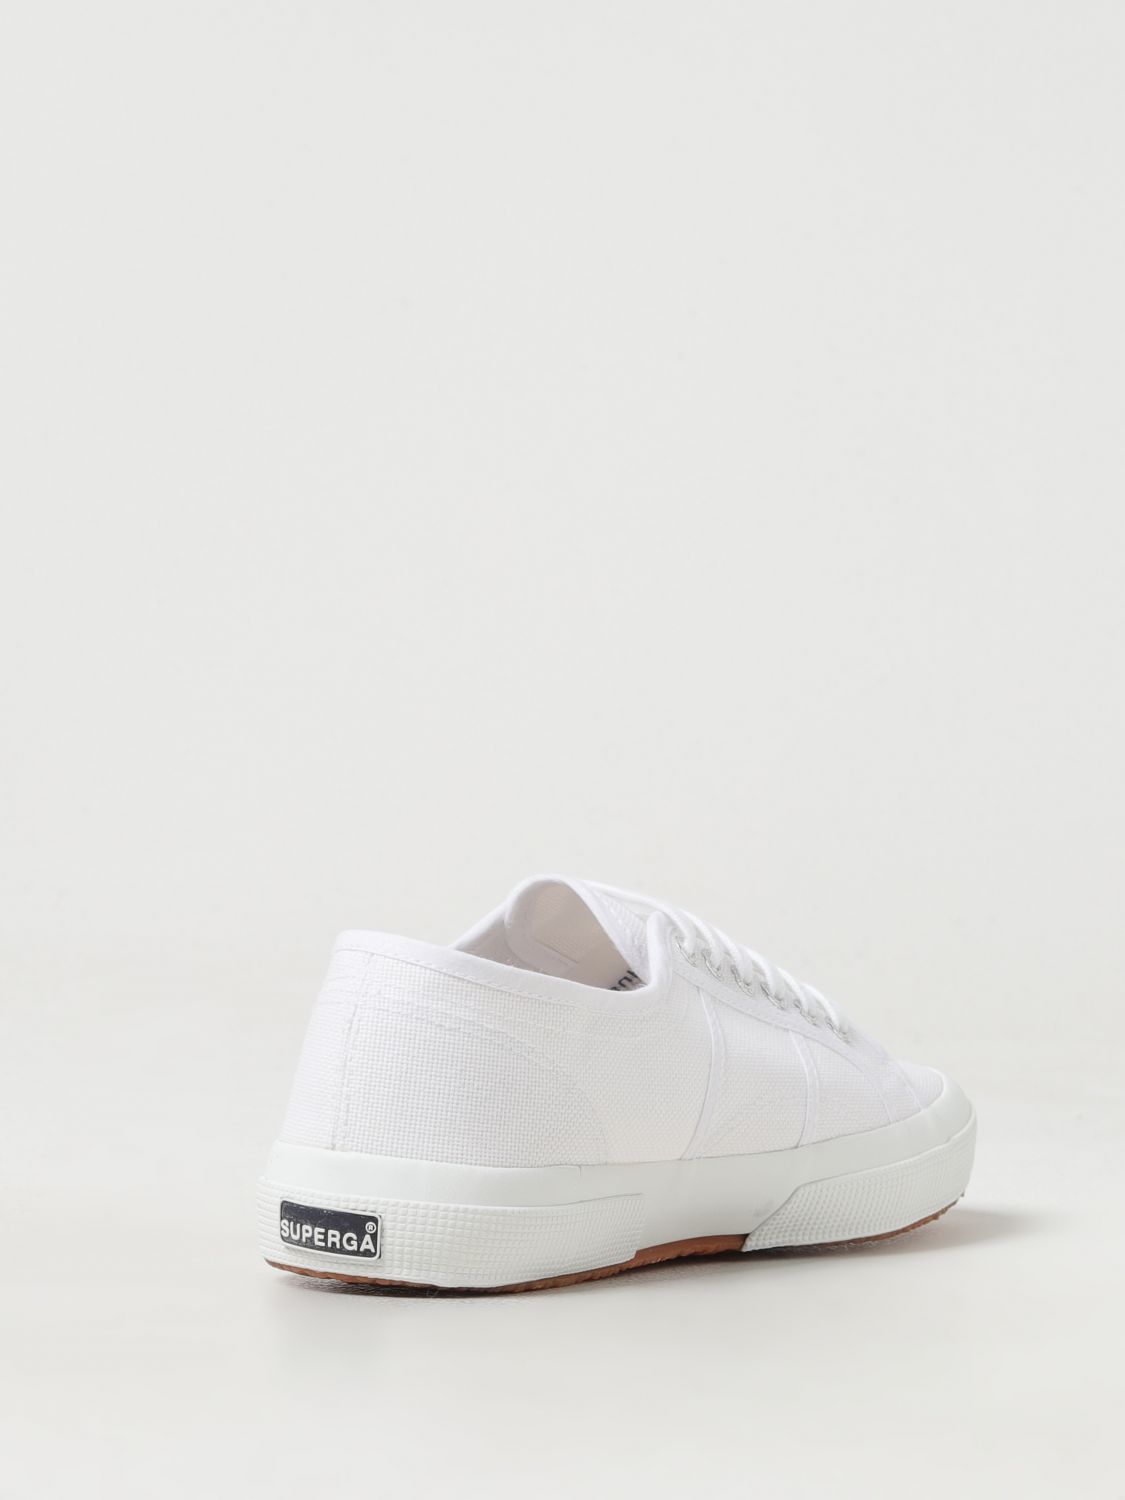 Aggregate 172+ superga white sneakers latest